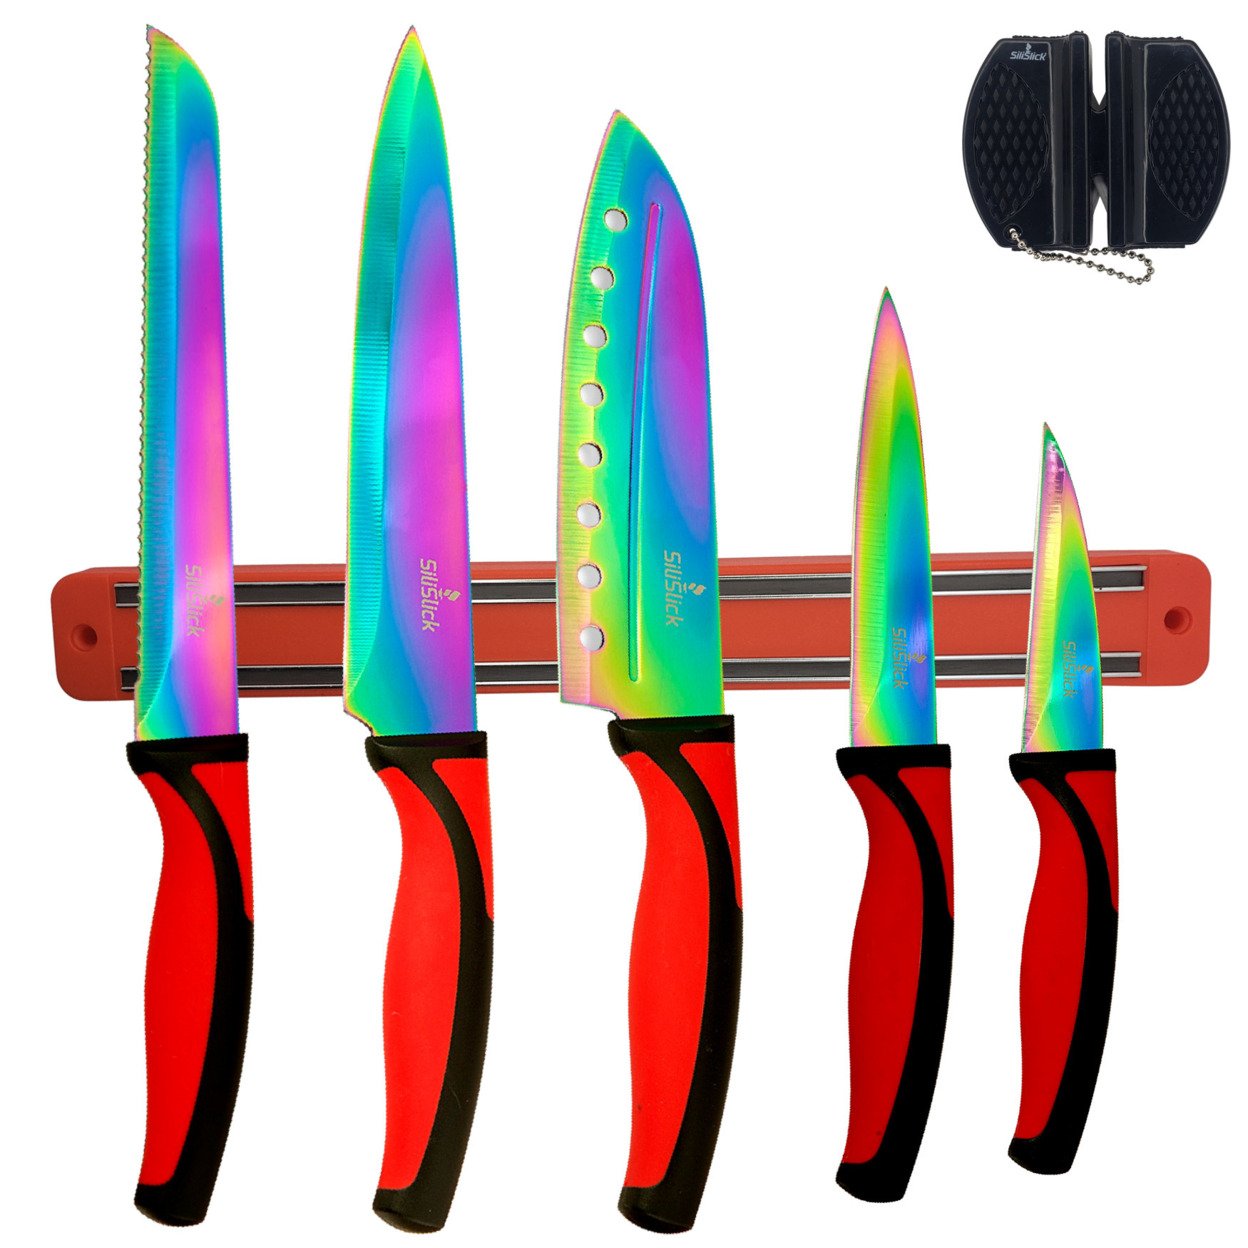 SiliSlick Stainless Steel Red Handle Knife Set - Titanium Coated Utility Knife, Santoku, Bread, Chef, & Paring + Sharpener & Mounting Rack